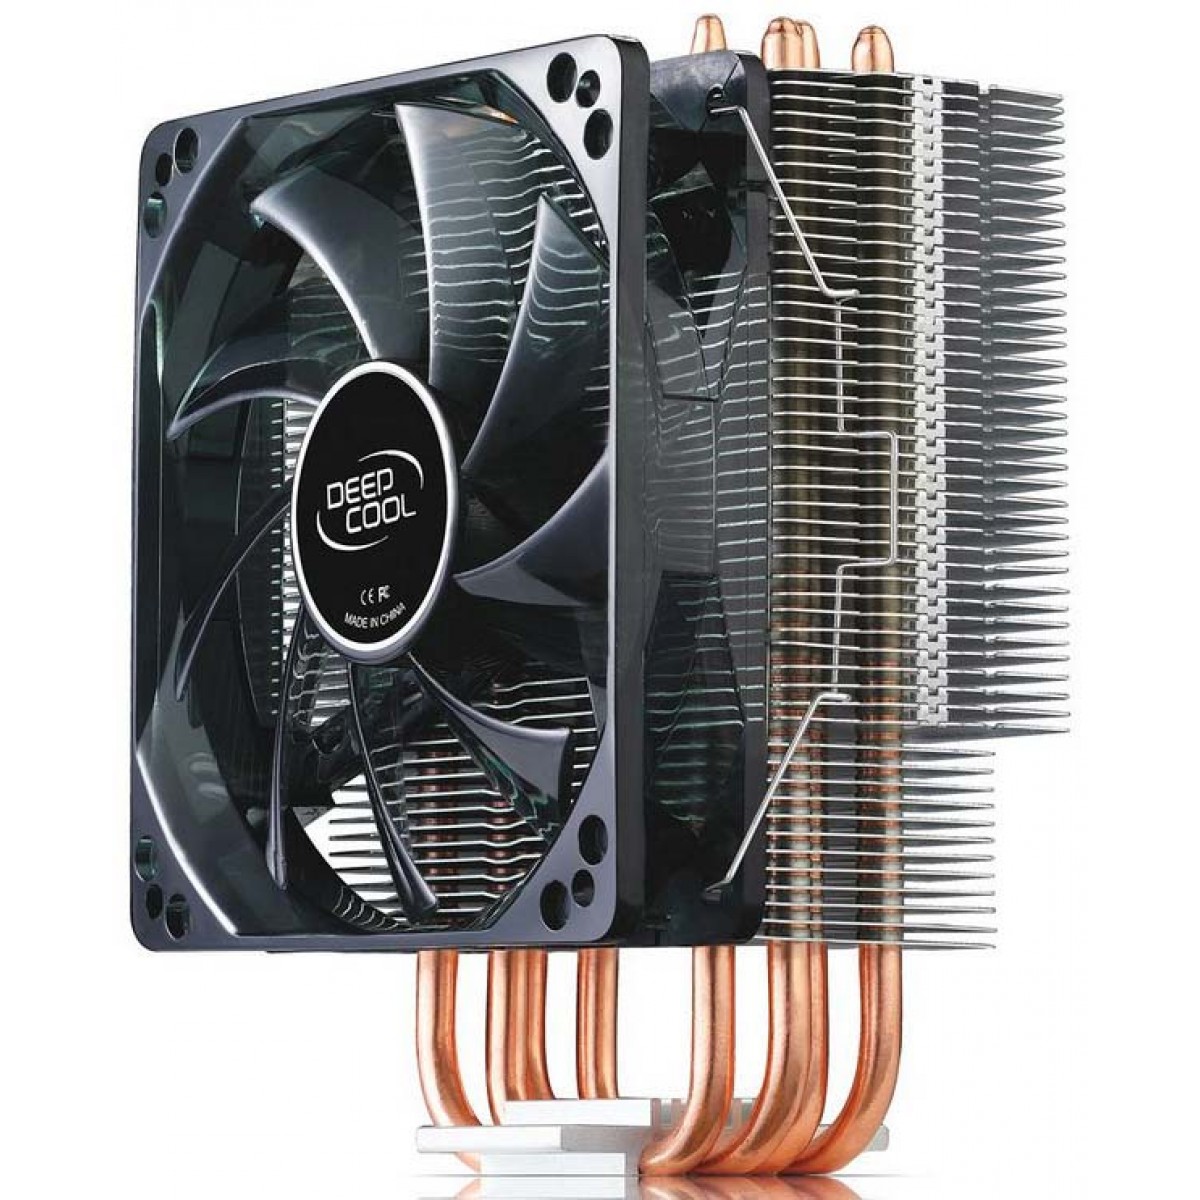 Cooler para Processador DeepCool Gammaxx 400, LED Blue 120mm, Intel-AMD, DP-MCH4-GMX400P-BL